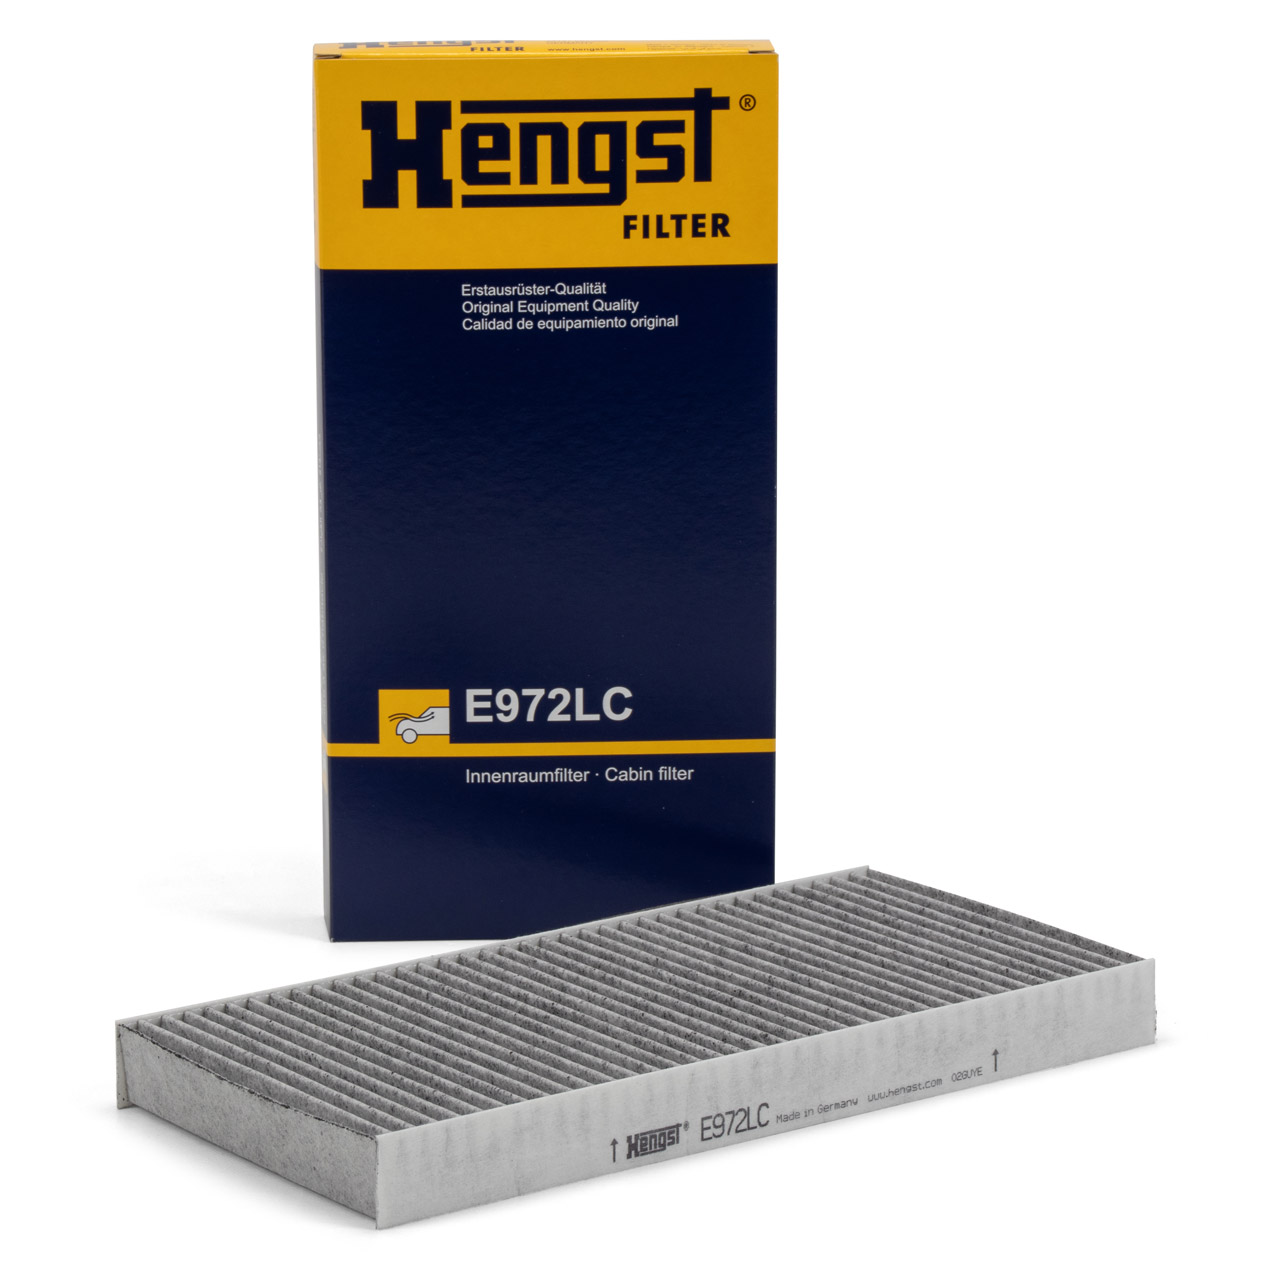 HENGST E972LC Innenraumfilter Aktivkohle für OPEL CORSA C SIGNUM VECTRA C SAAB